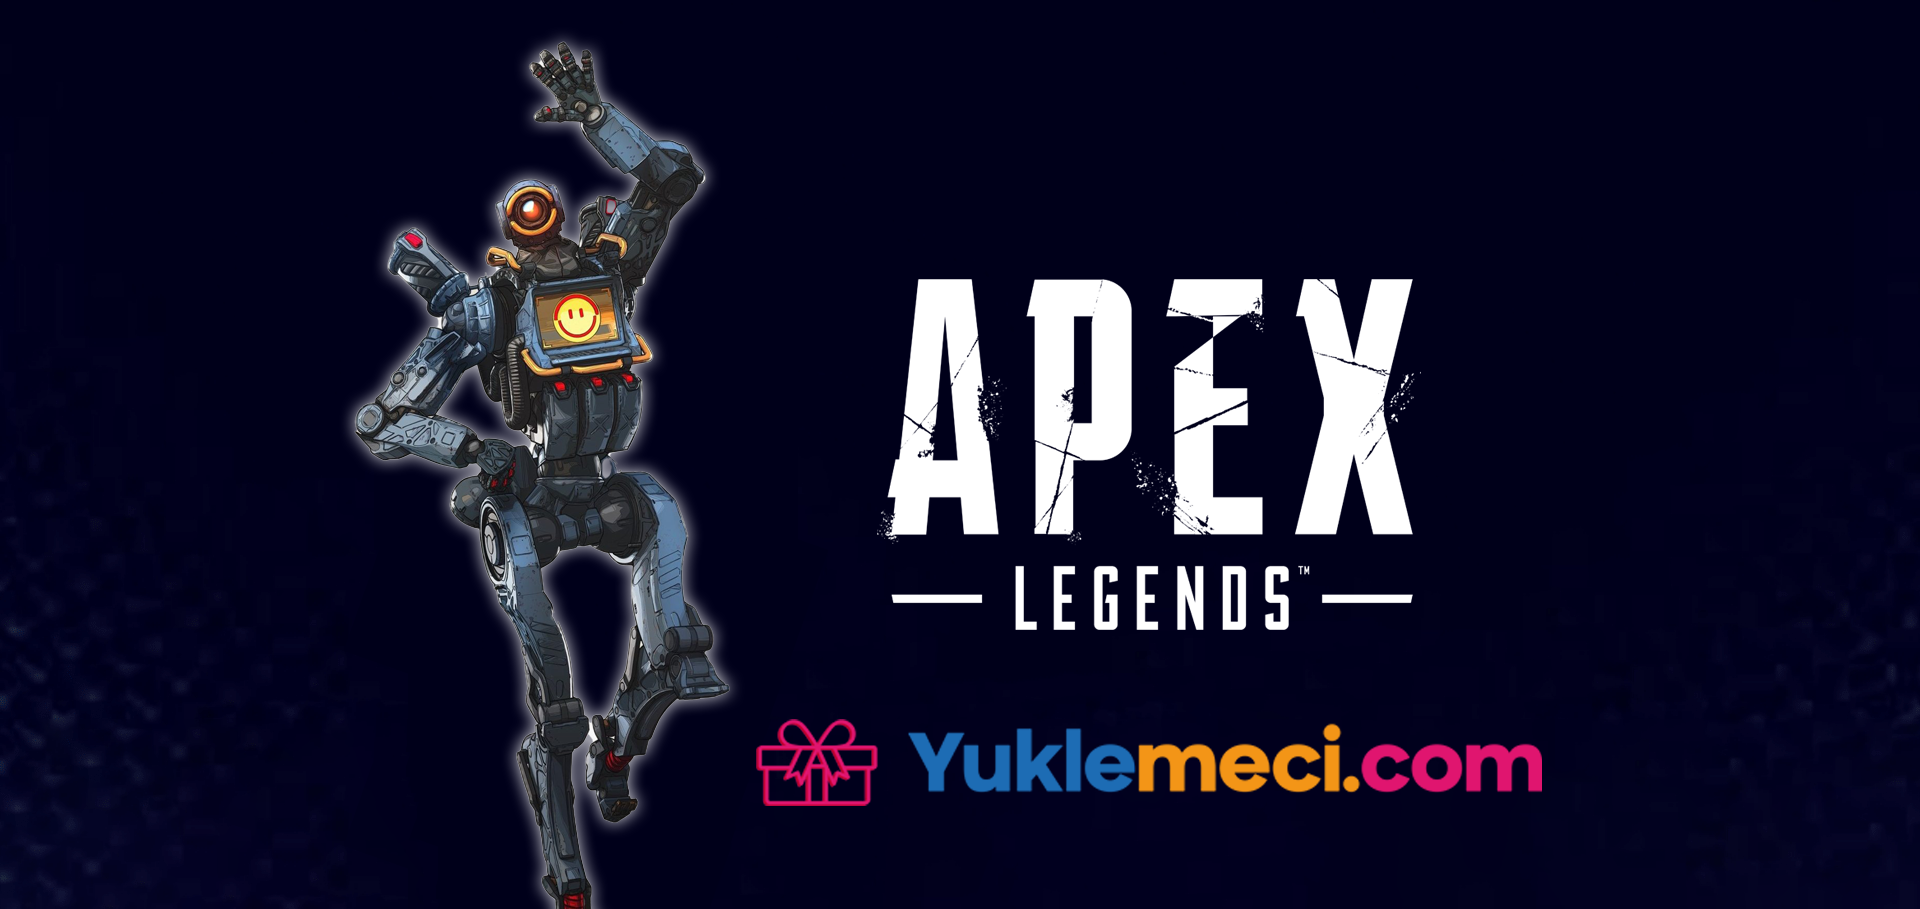 Apex Legends - 2150 Coins